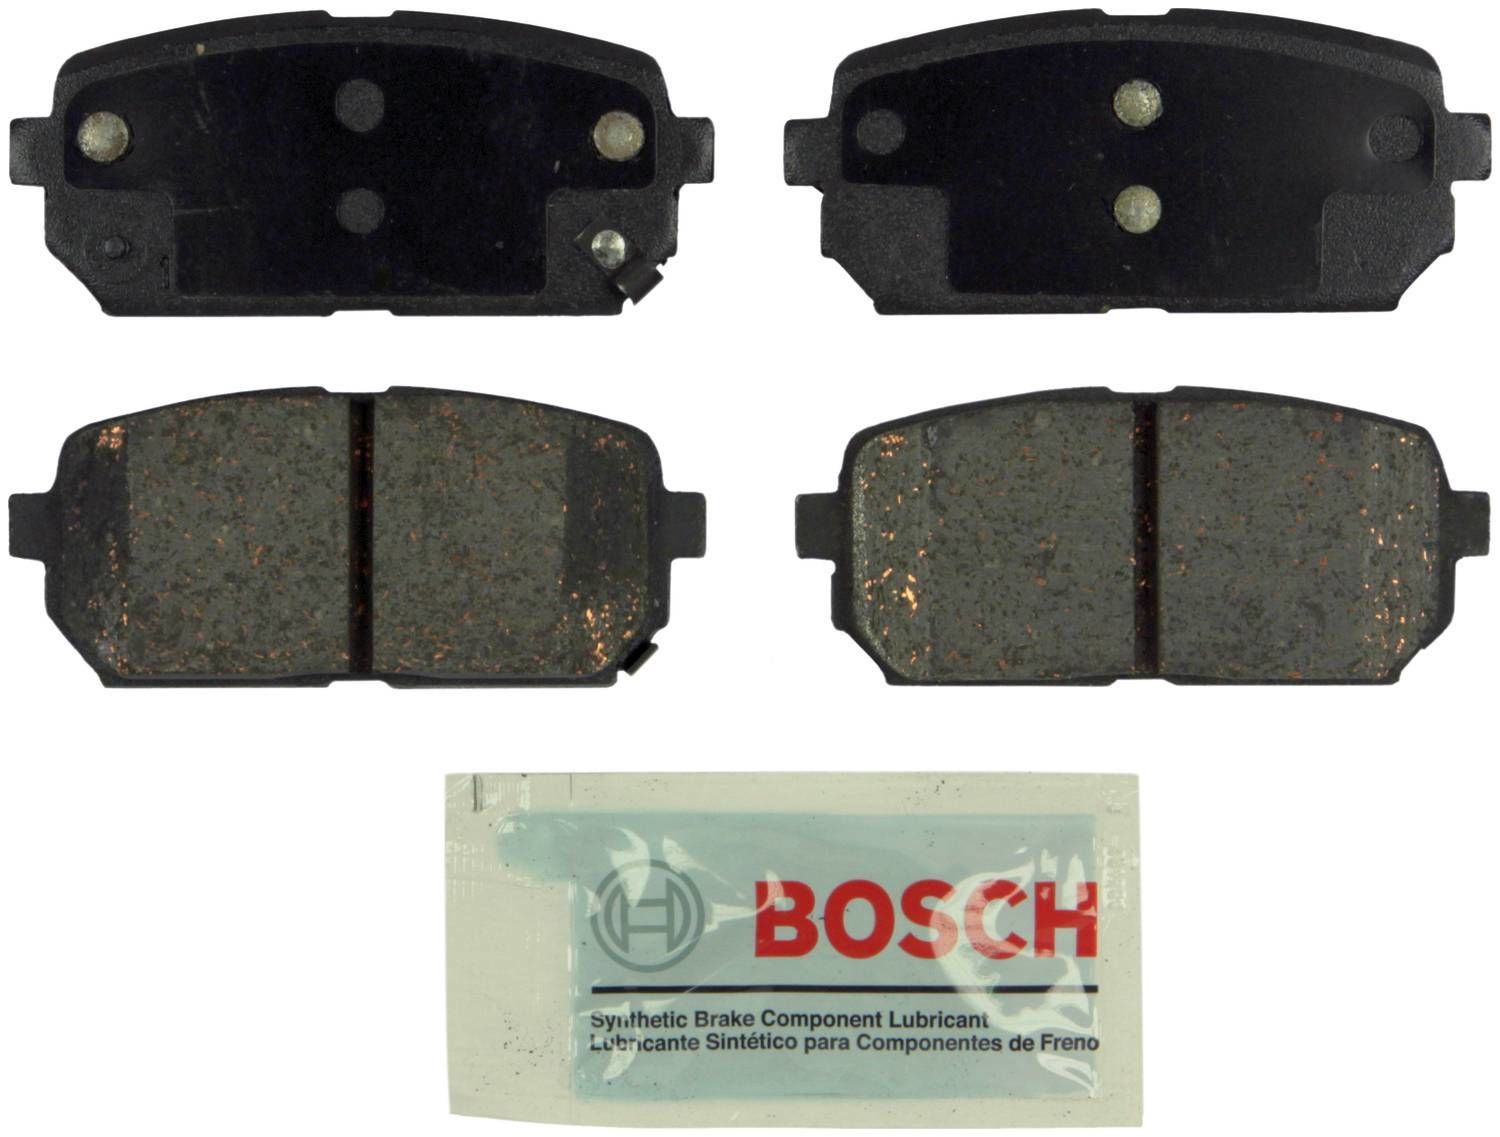 BOSCH BRAKE - Bosch Blue Ceramic Brake Pads (Rear) - BQC BE1296